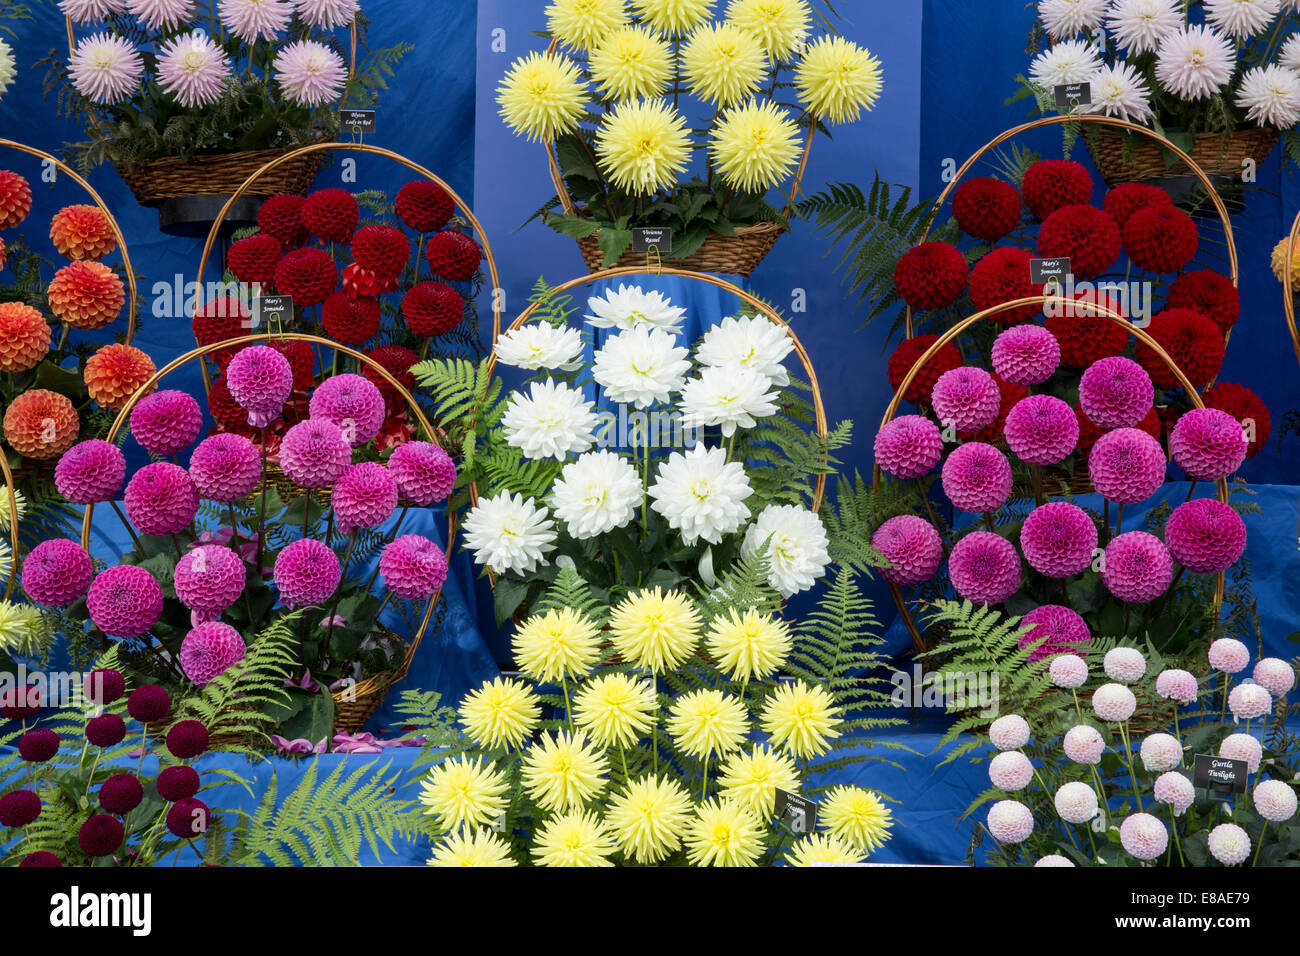 Malvern Autumn RHS show 2014 display of prize winning dahlia flowers Stock Photo